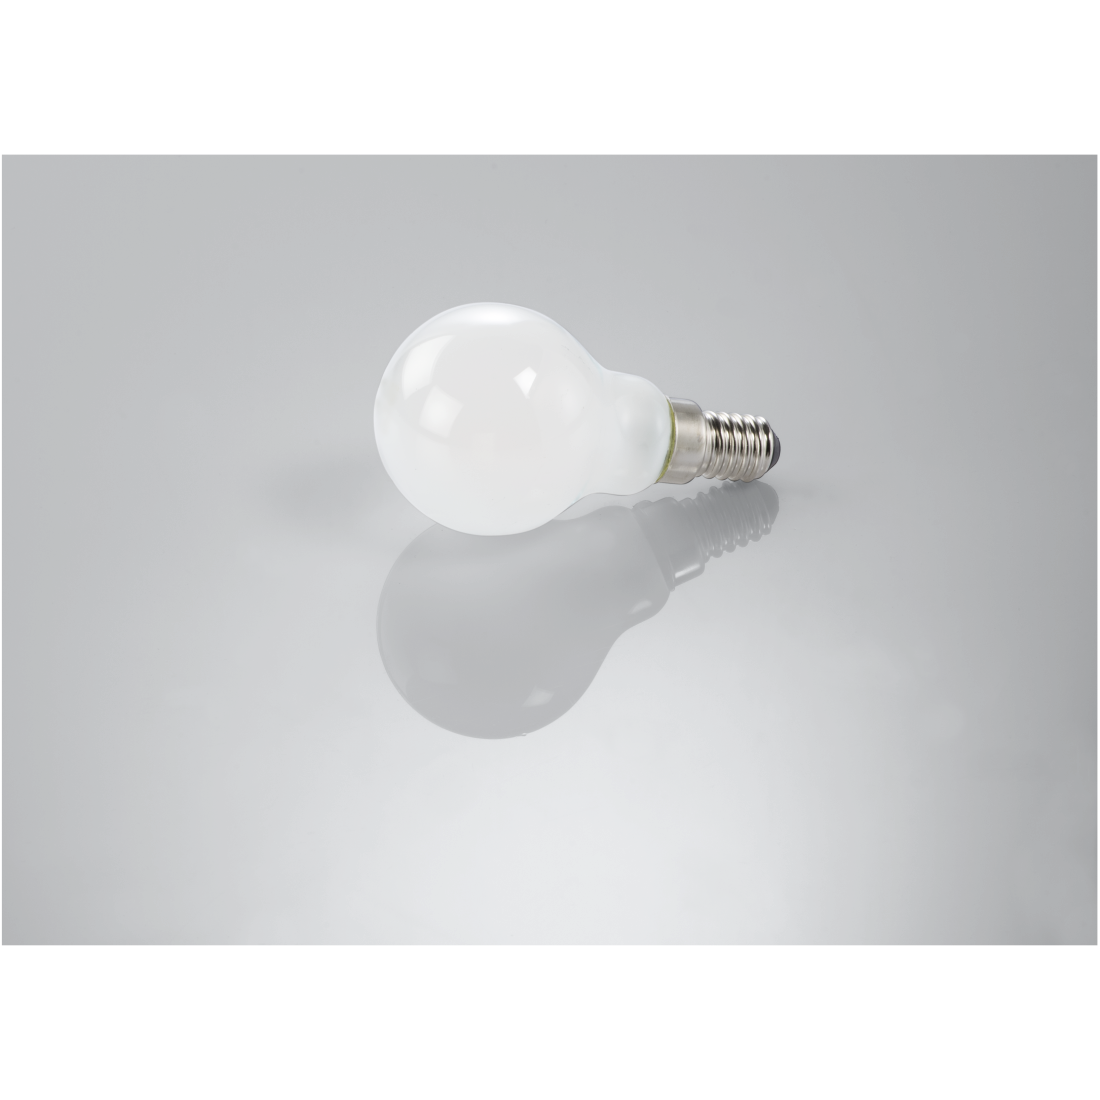 abx3 High-Res Image 3 - Xavax, Ampoule filament LED, E14, 250lm rempl. 25W, amp. sphr., mate, blc chd